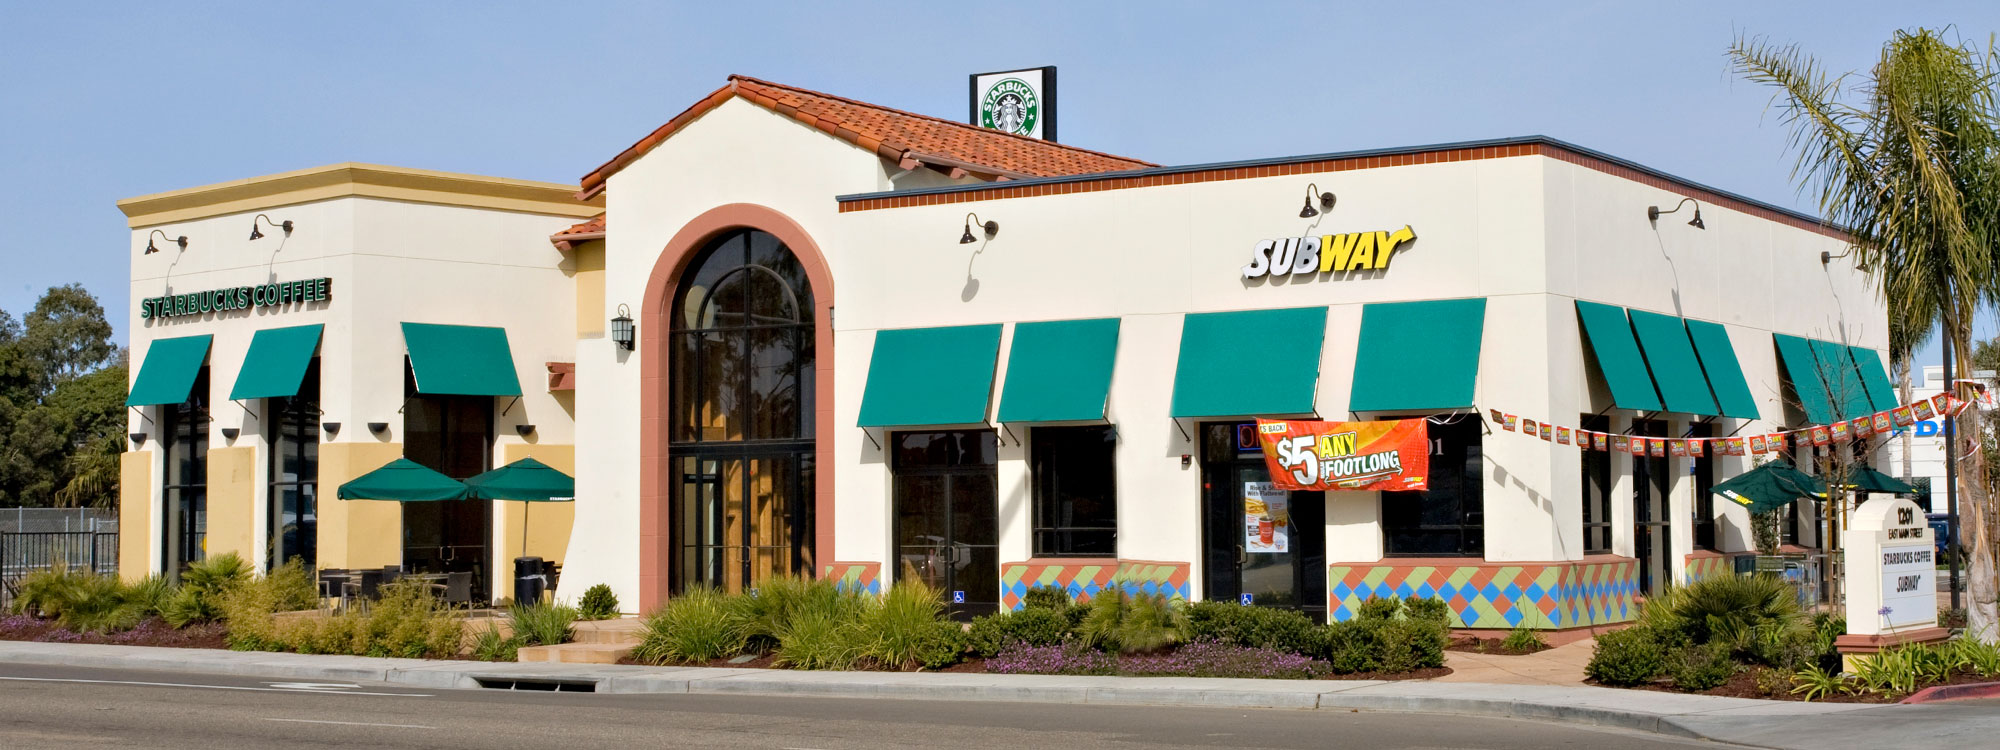 Fast Food Contractor and Builder - Subway Sandwich Fast Food Builder - Starbucks Santa Maria Construction Company - JW Design & Construction